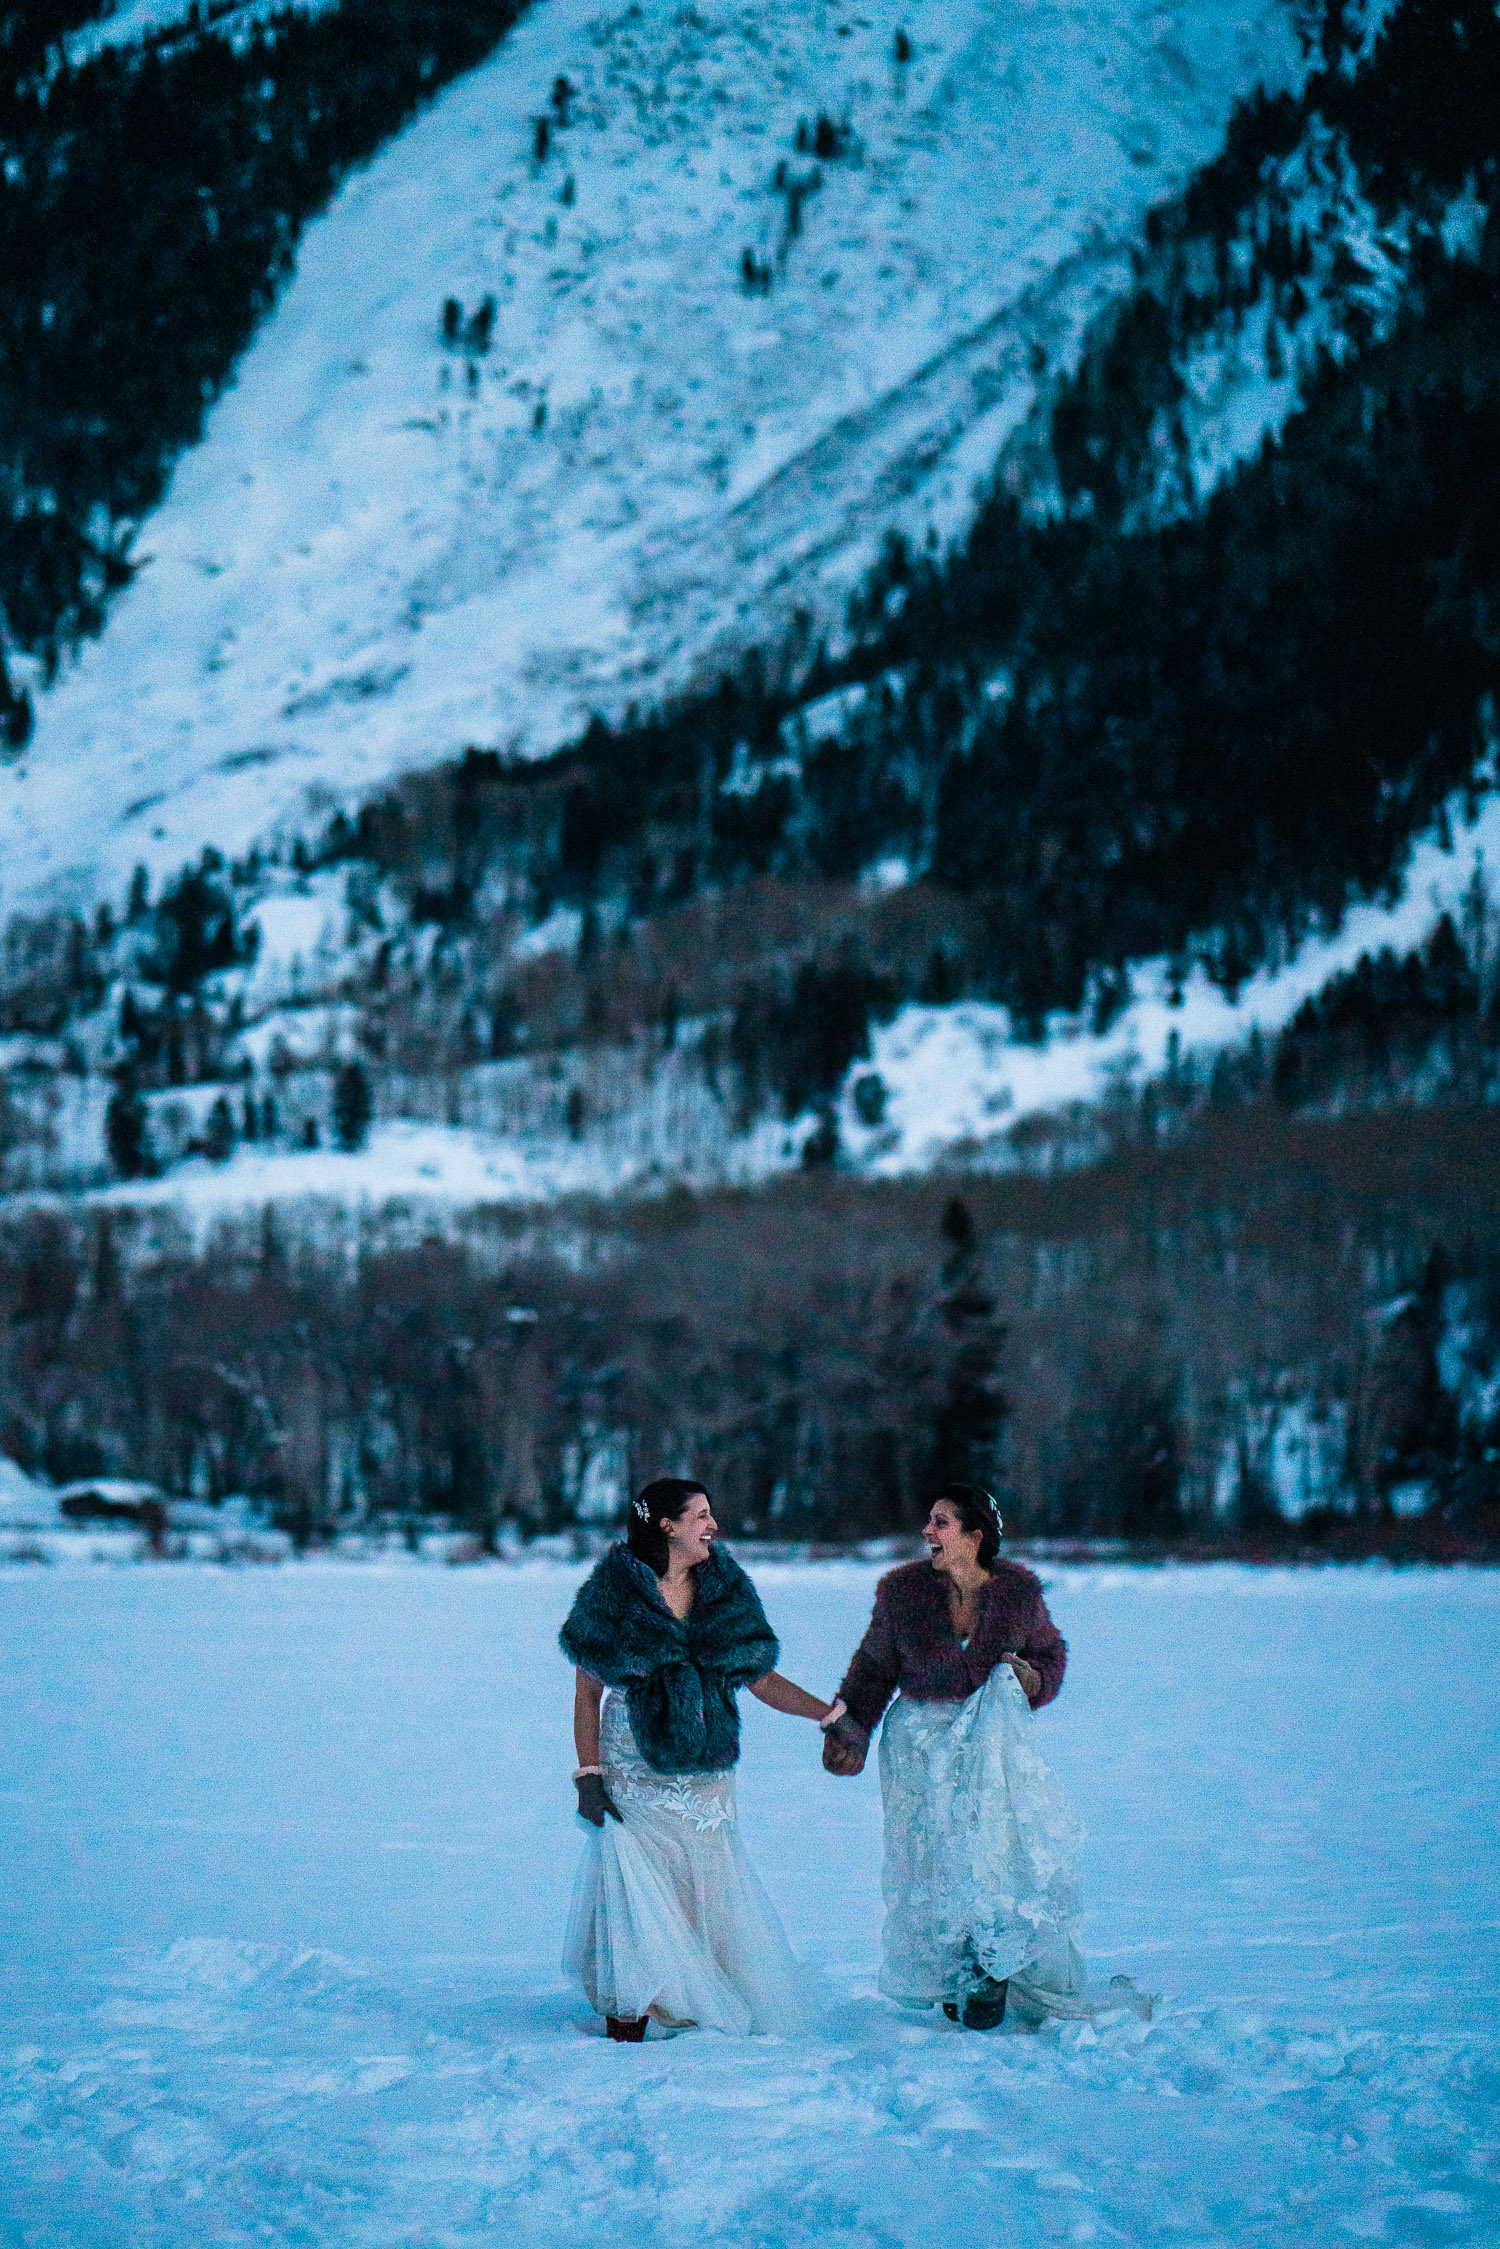 lesbian brides skipping through a snowy field